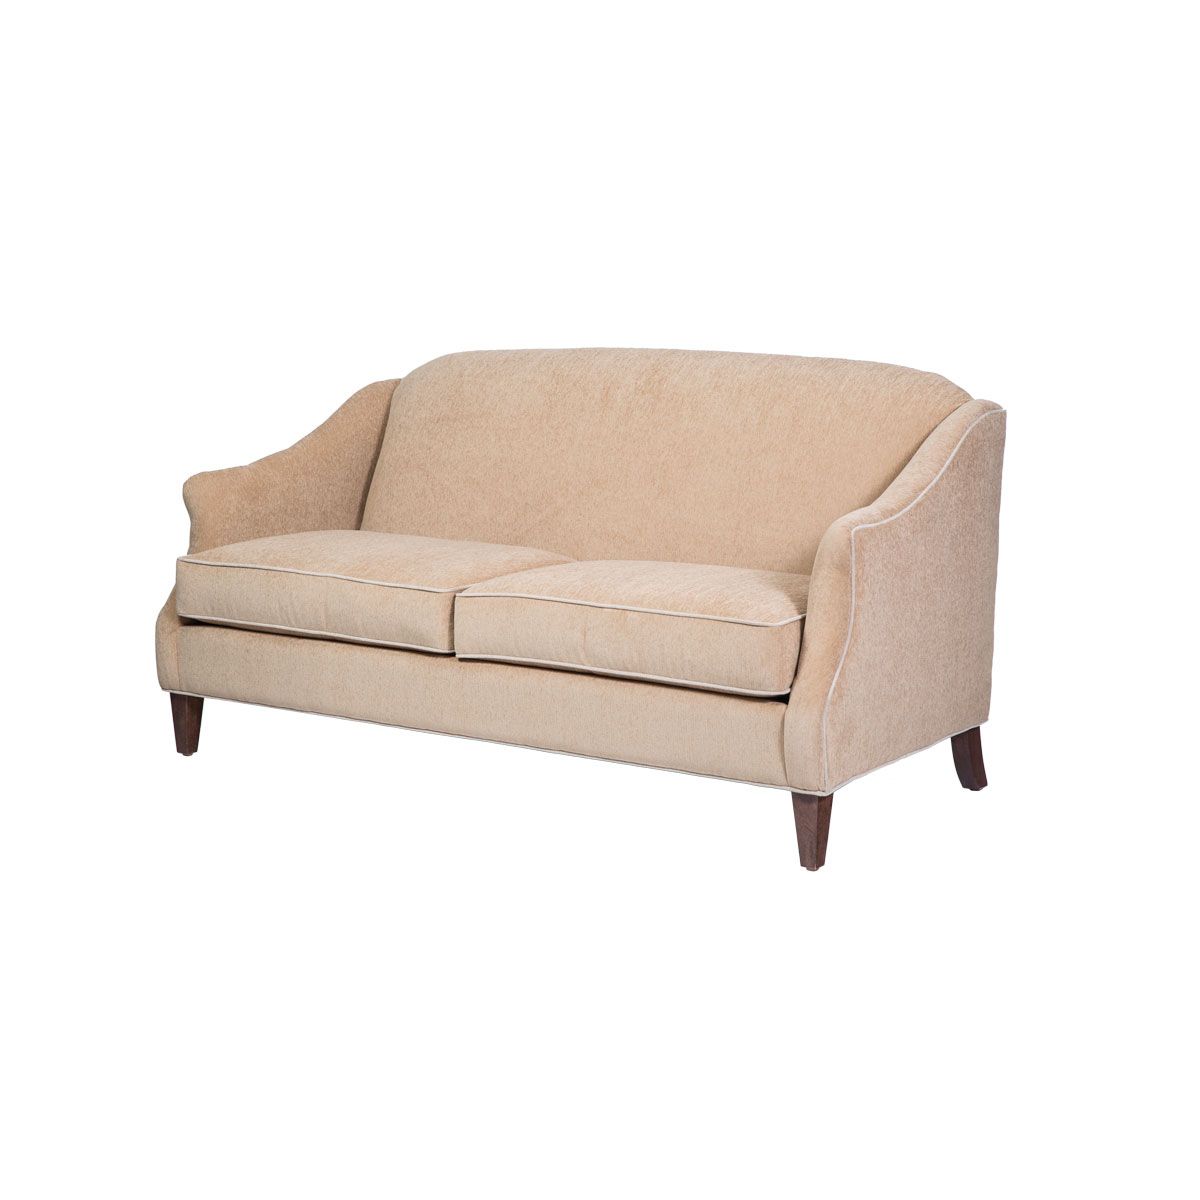 Oxford Sofa – Akin Complete Furniture With Regard To Oxford Sofas (View 11 of 15)